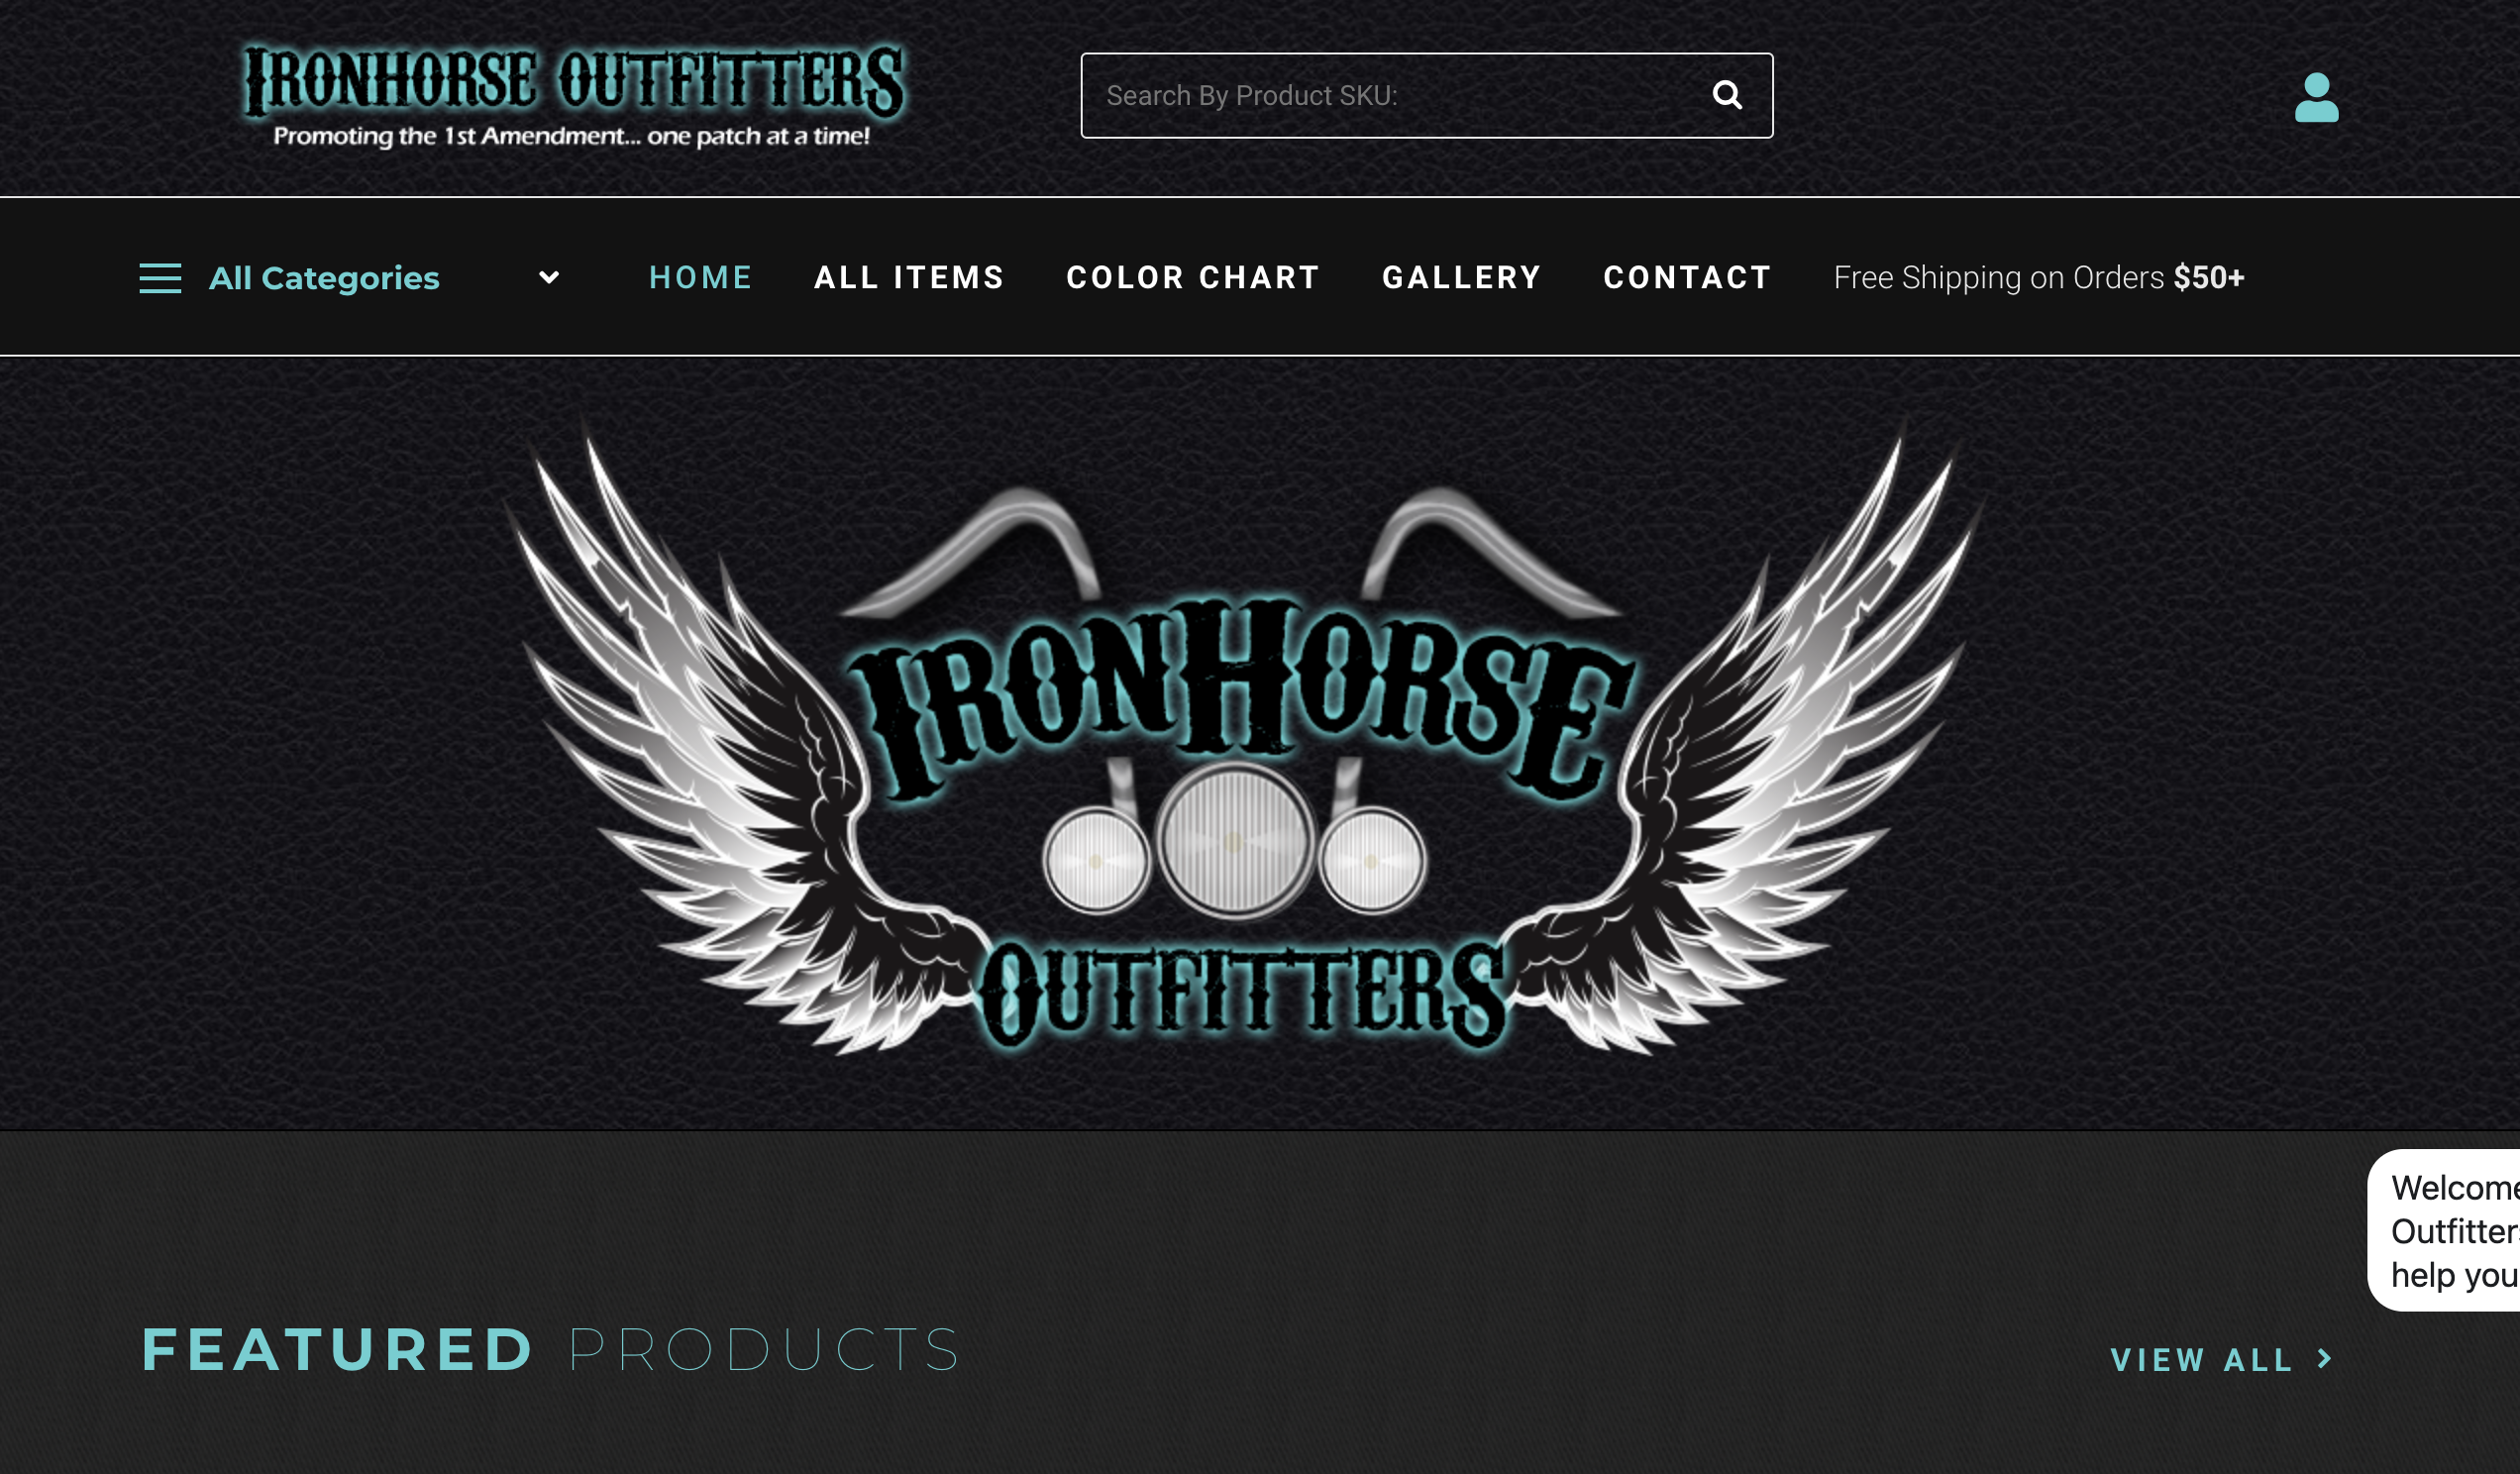 IronhorseOutfitters.us